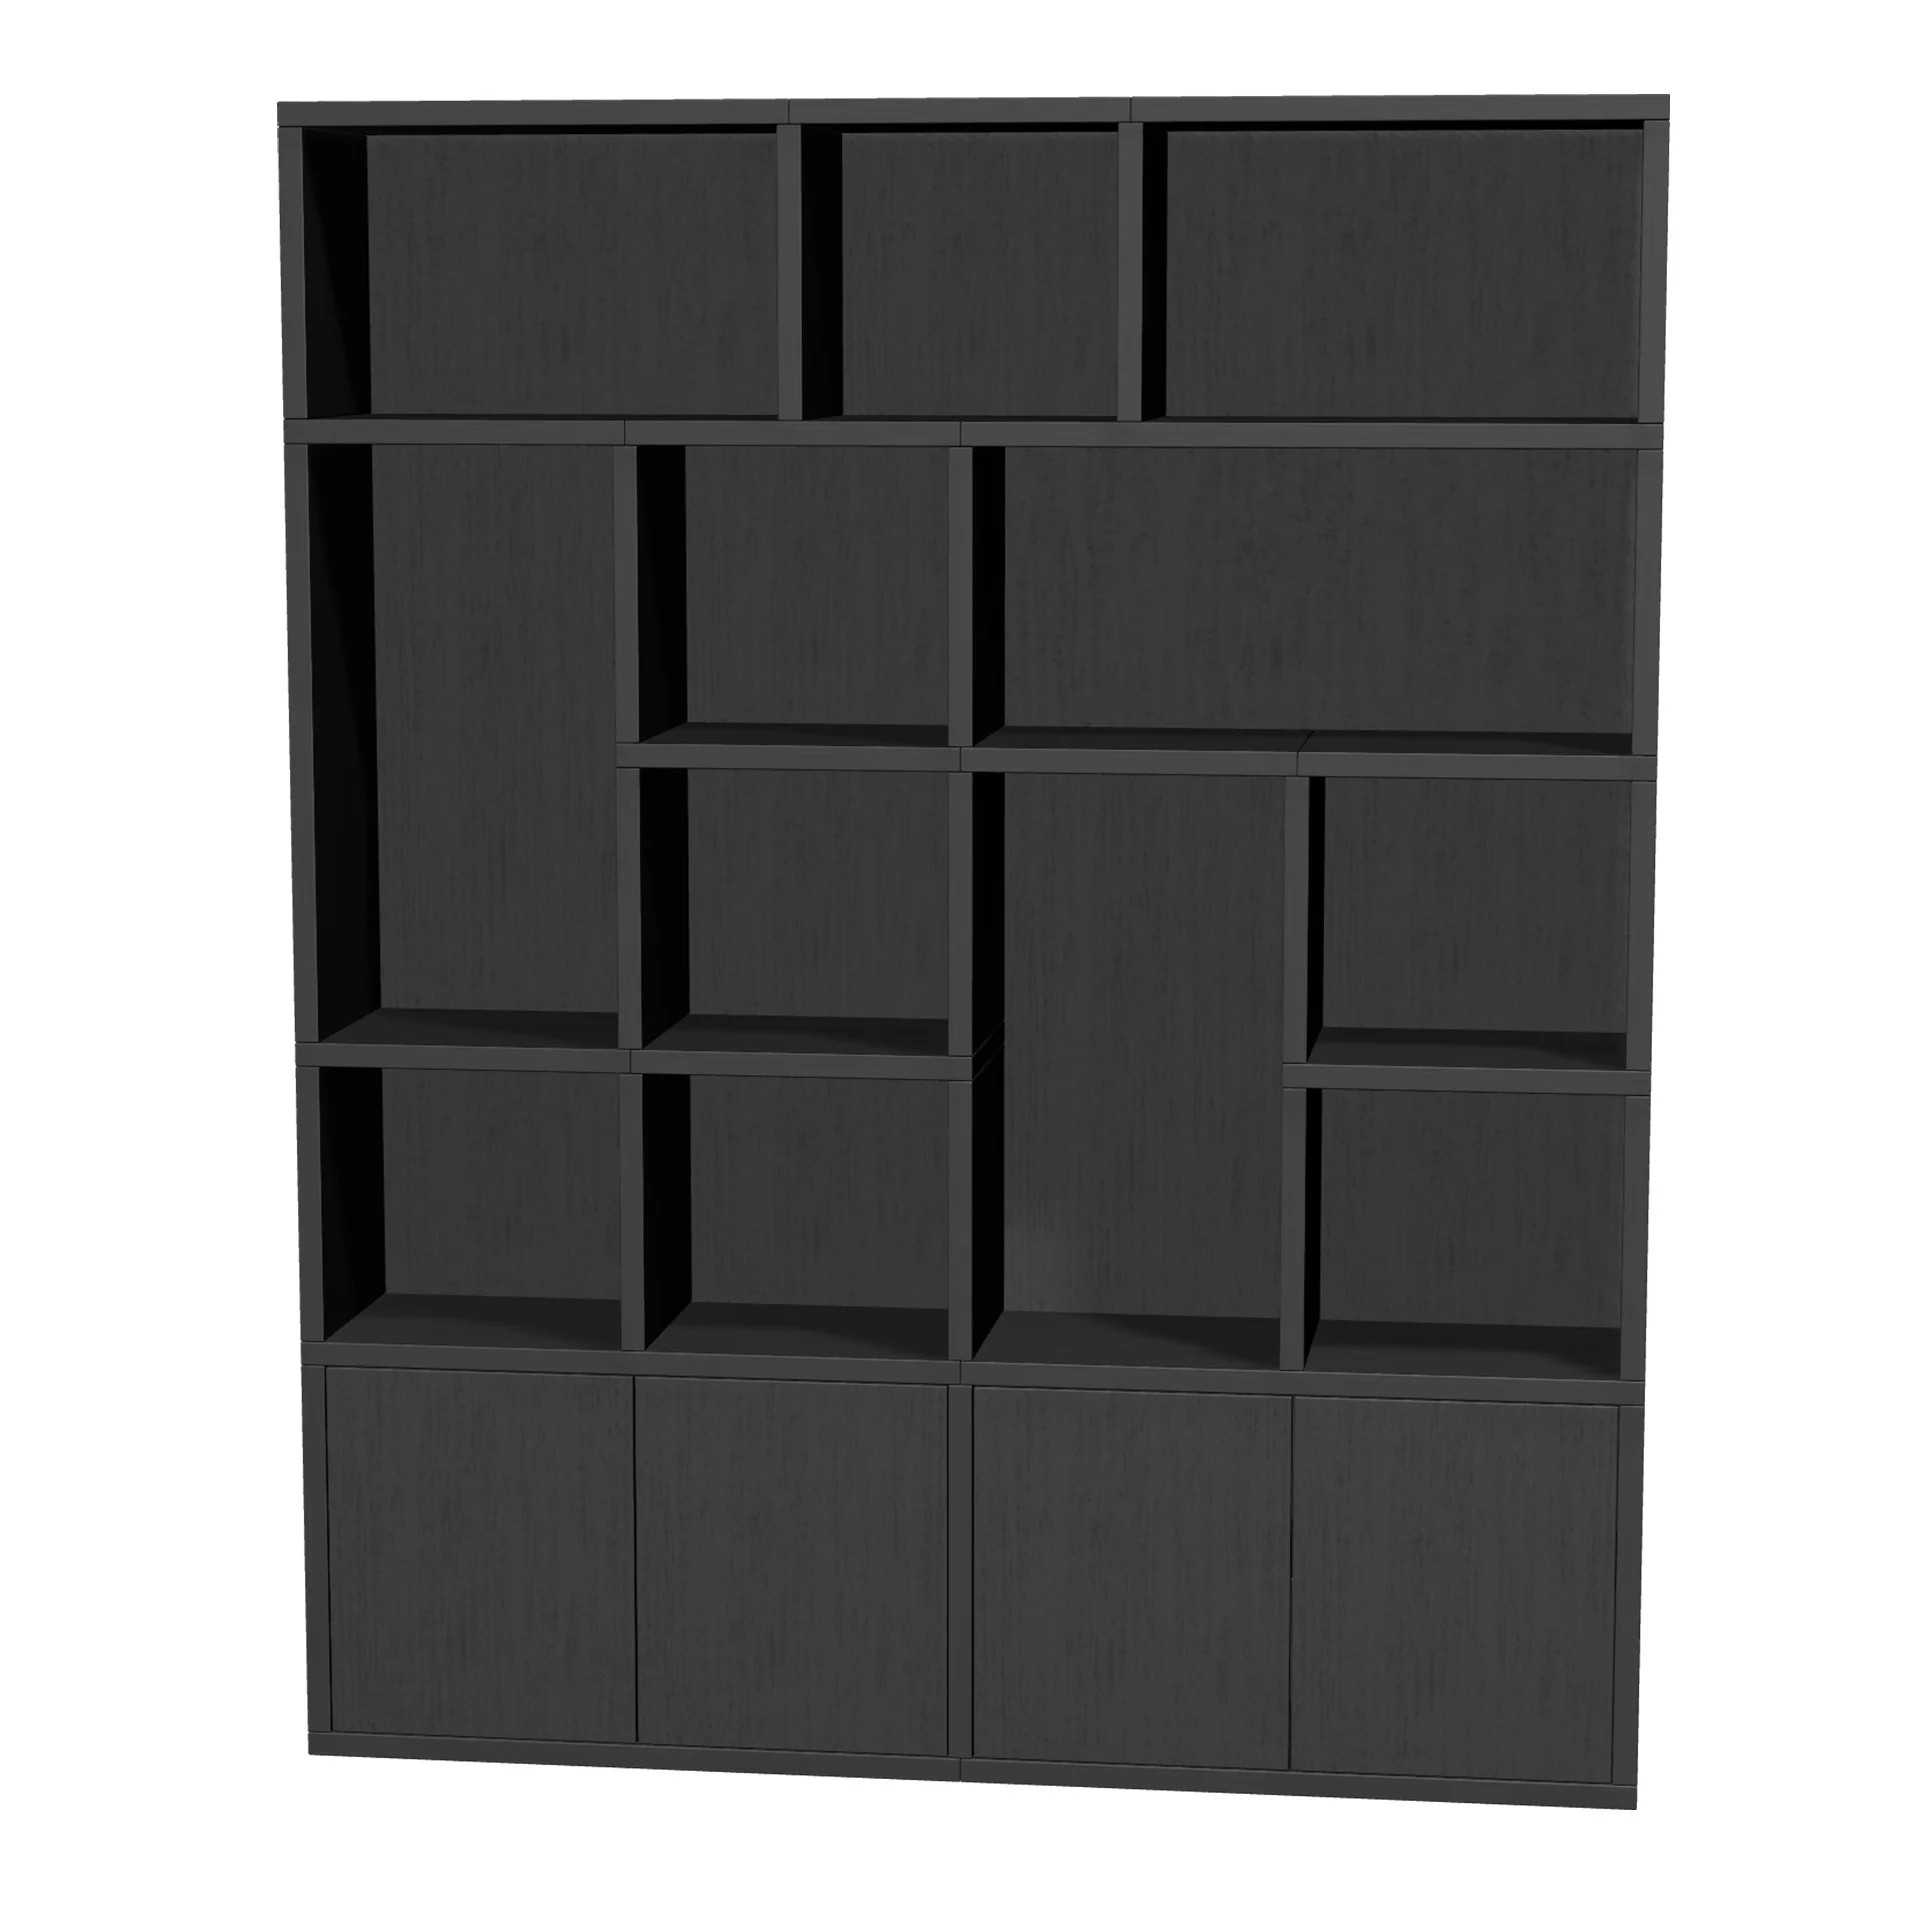 TSFC011 en panel mueble roble negro